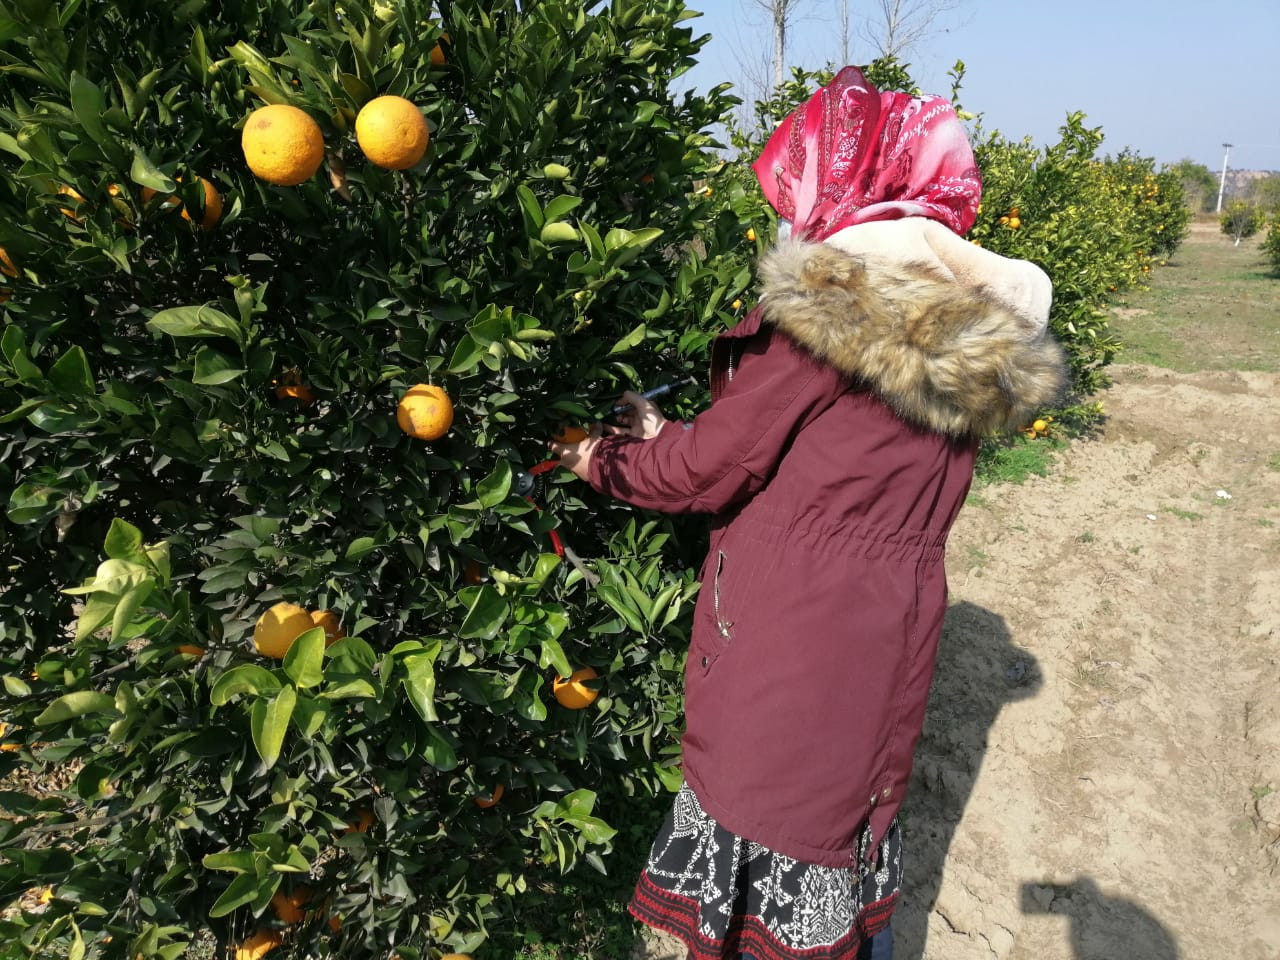 Pakistani scientists develop AI method to determine citrus fruit sweetness - The Express Tribune